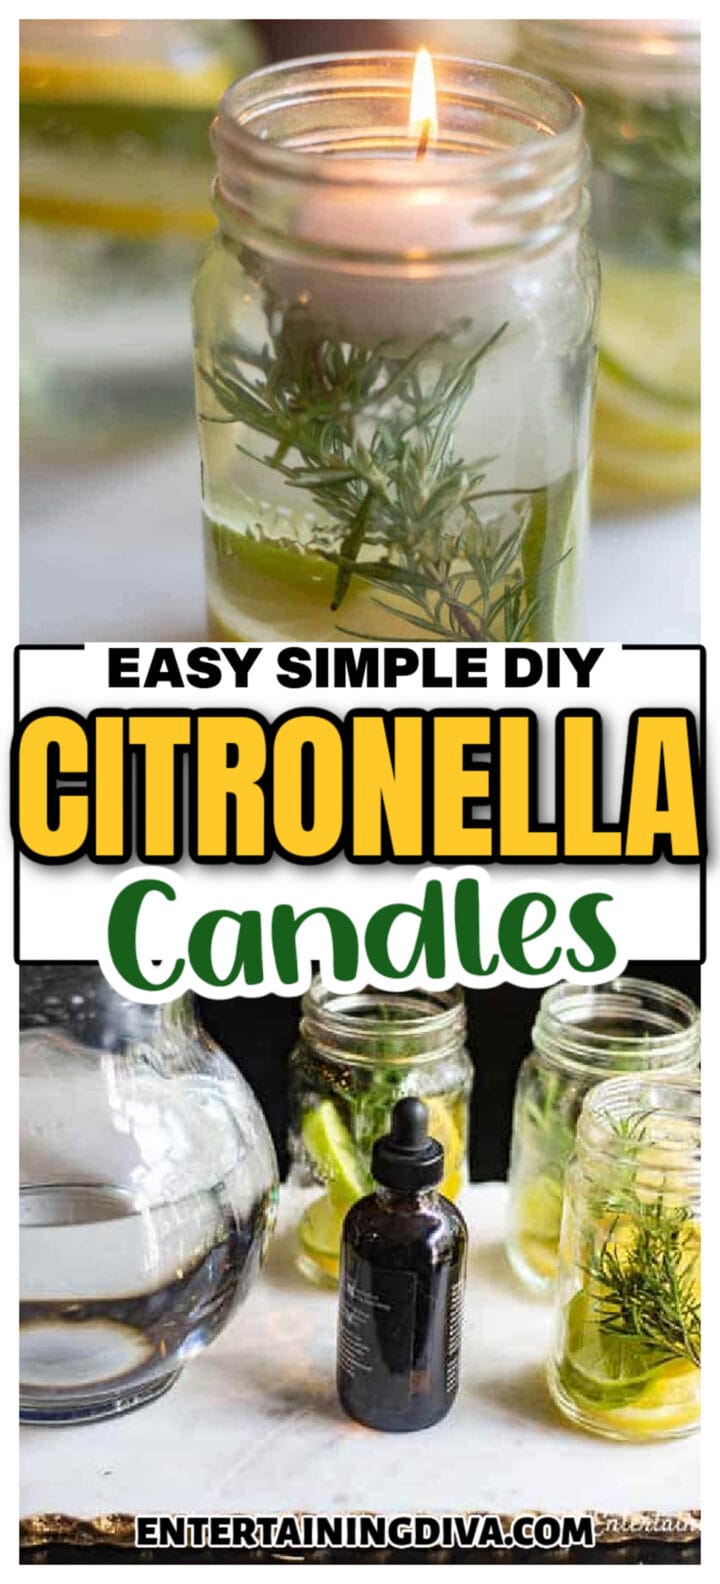 Super Simple DIY Citronella Candles (No wax required!)